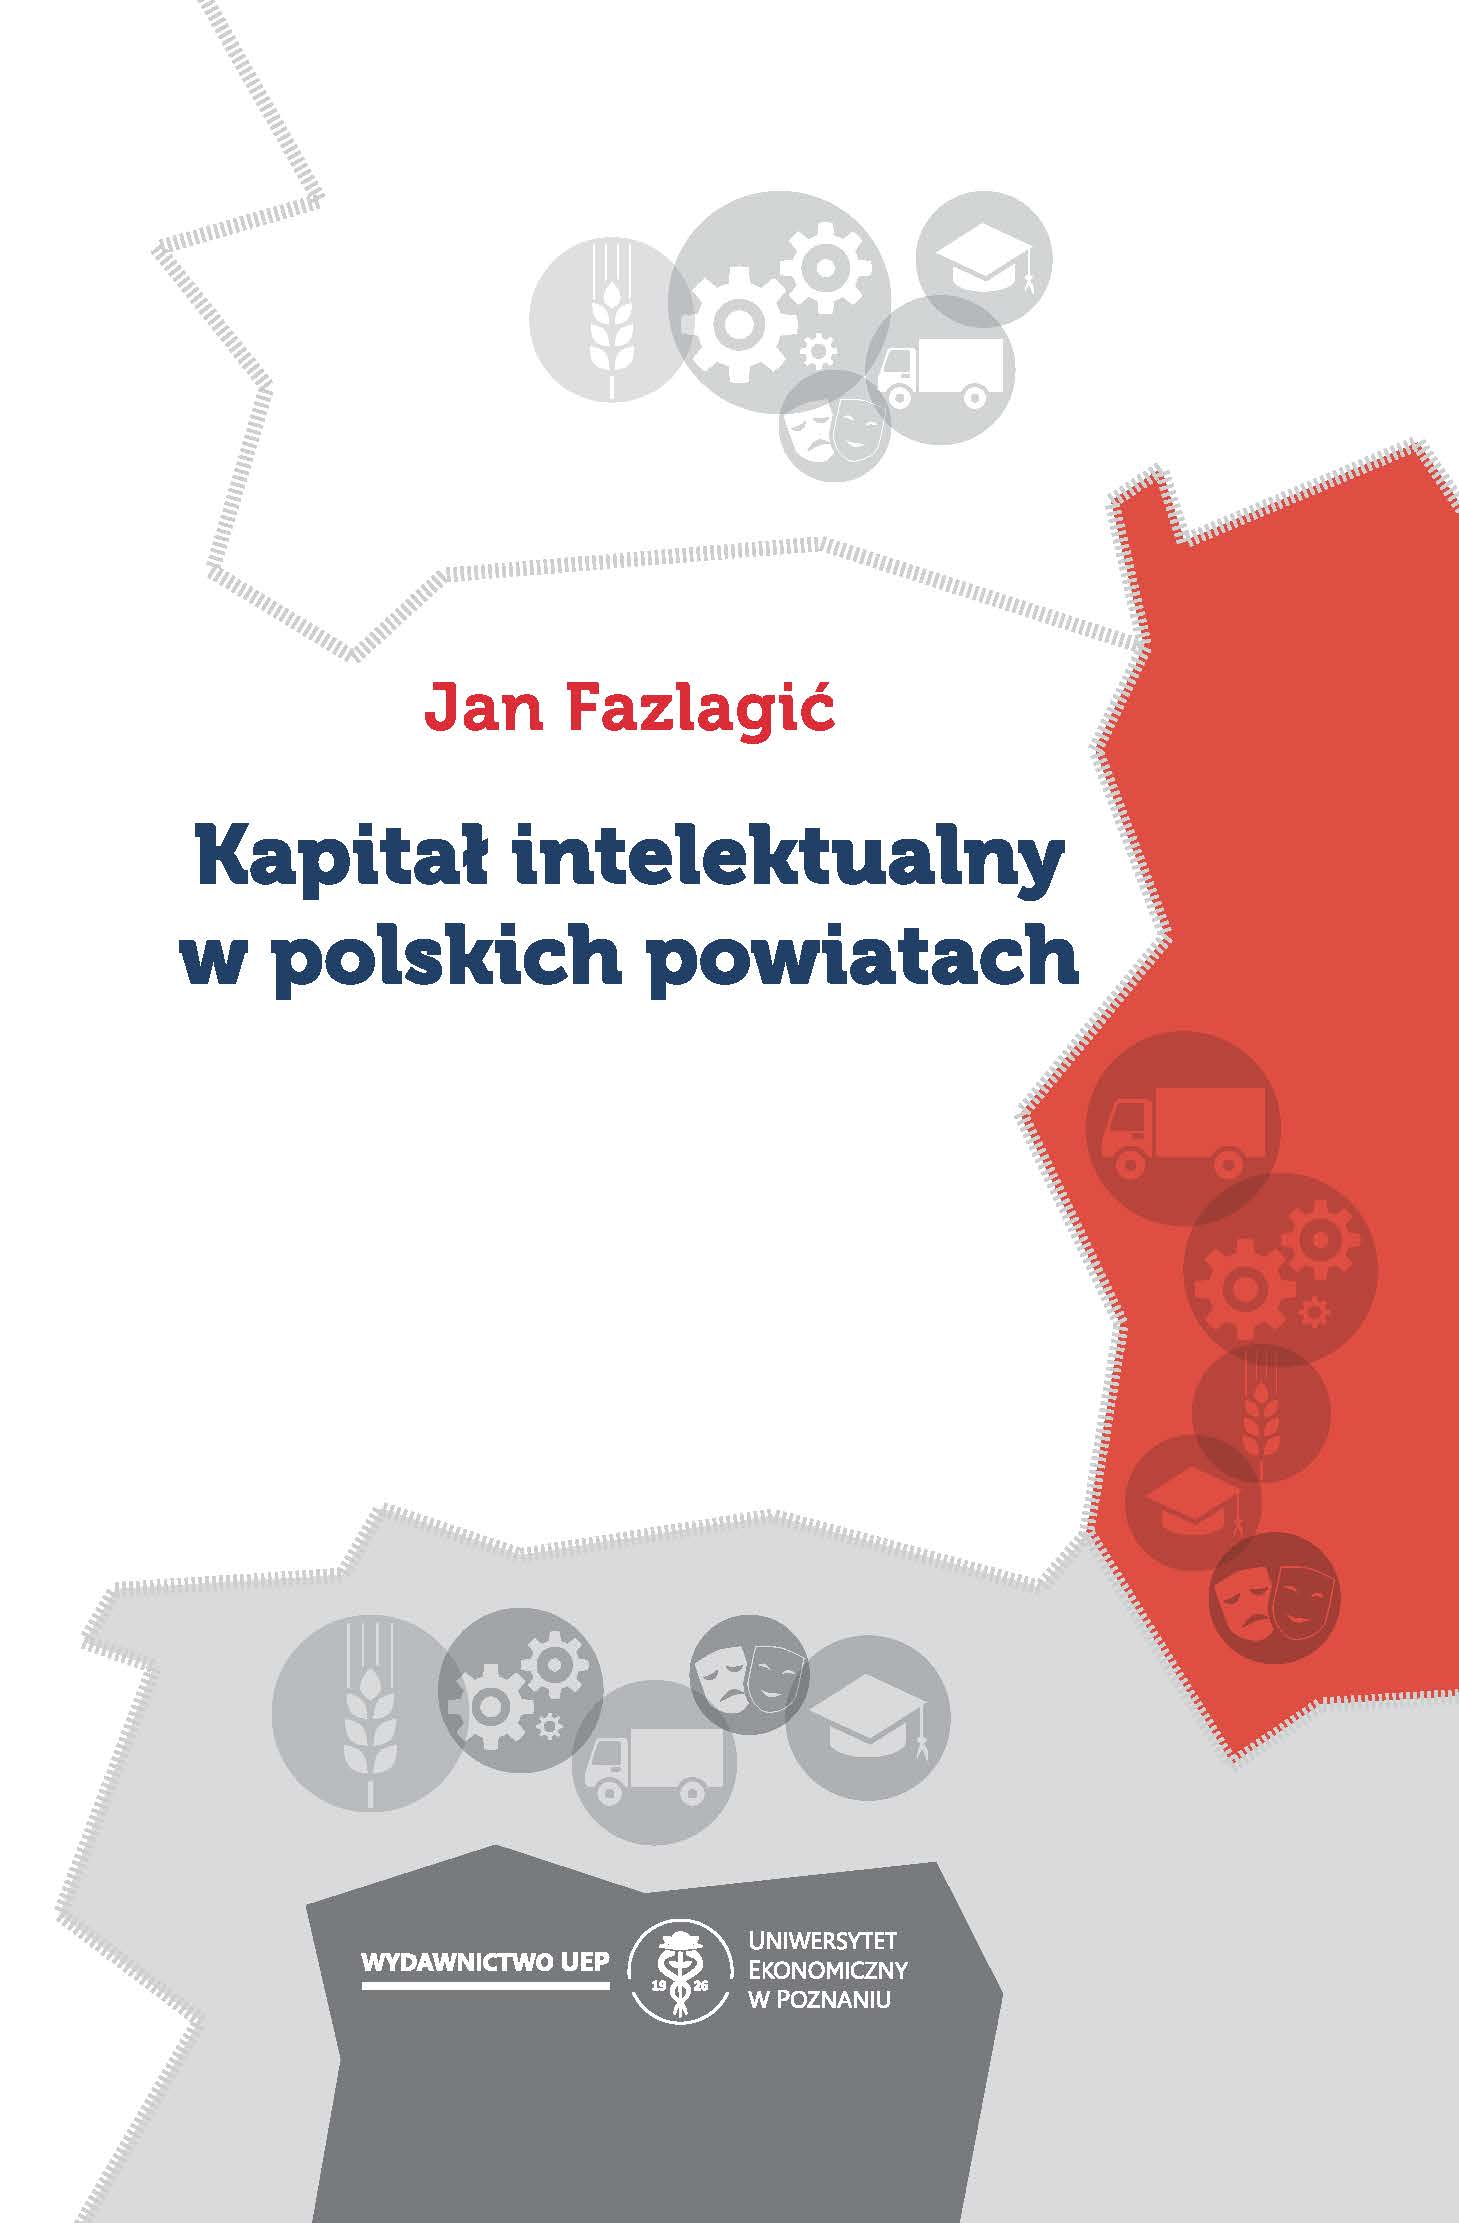 Intellectual capital in Polish counties